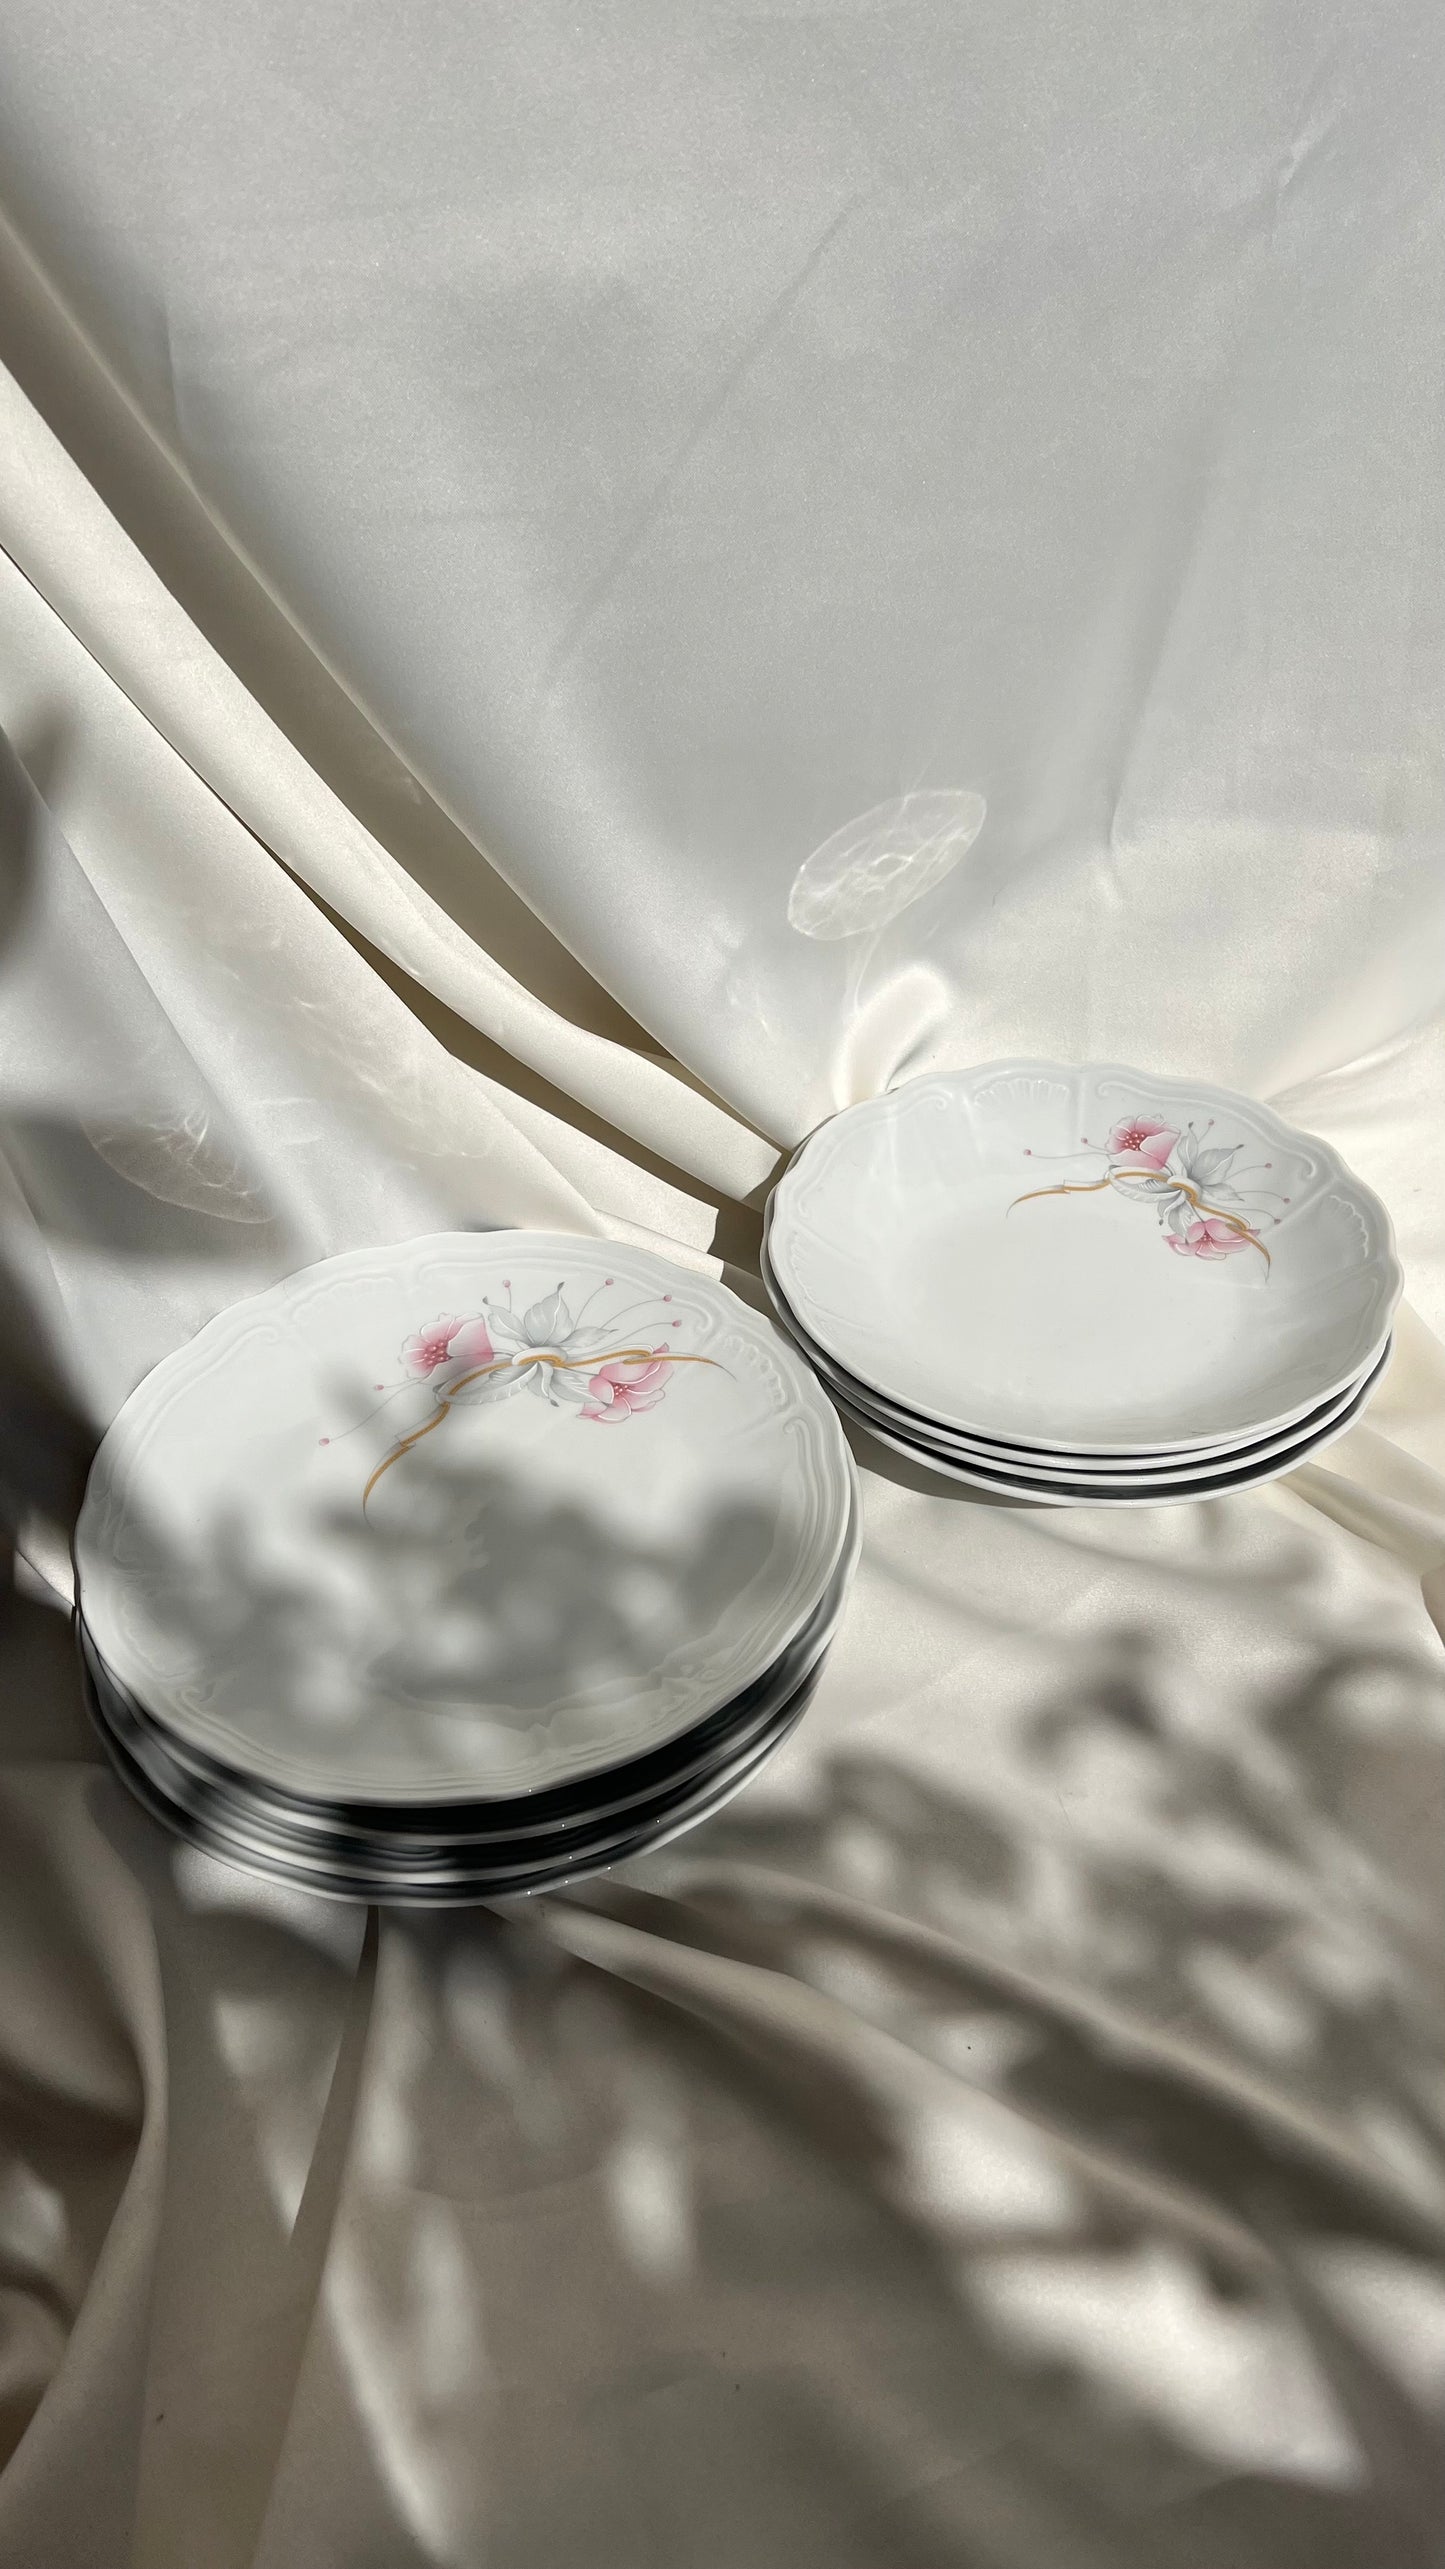 Wensiedel Bavarian porcelain | וונסידל בוואריה פורצלן